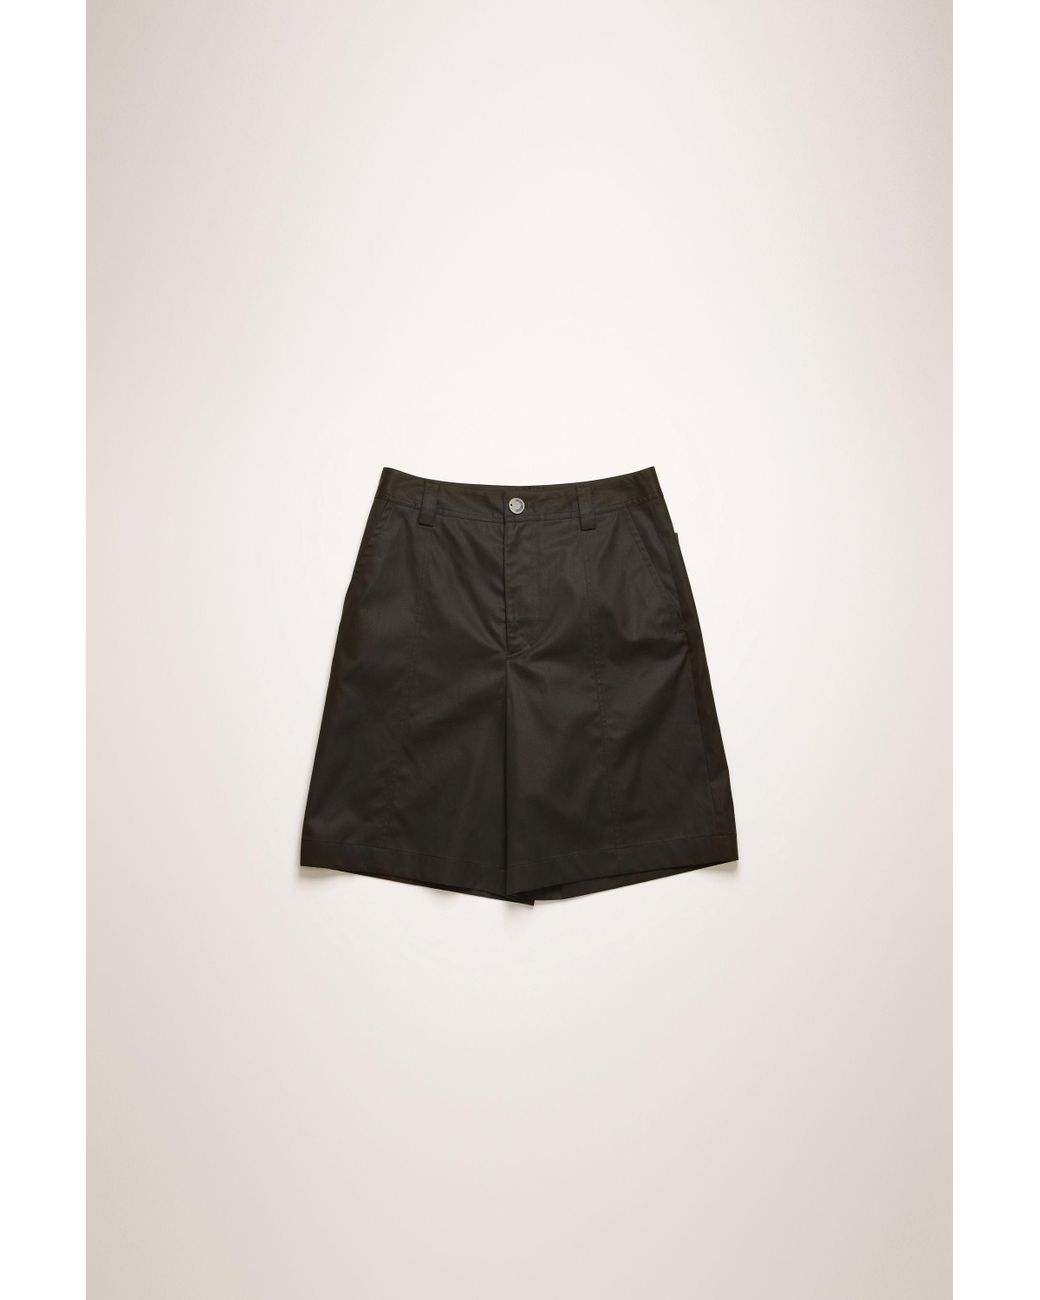 Acne Studios Fn-mn-shor000027 Black Wide-leg Cotton Shorts for Men - Lyst